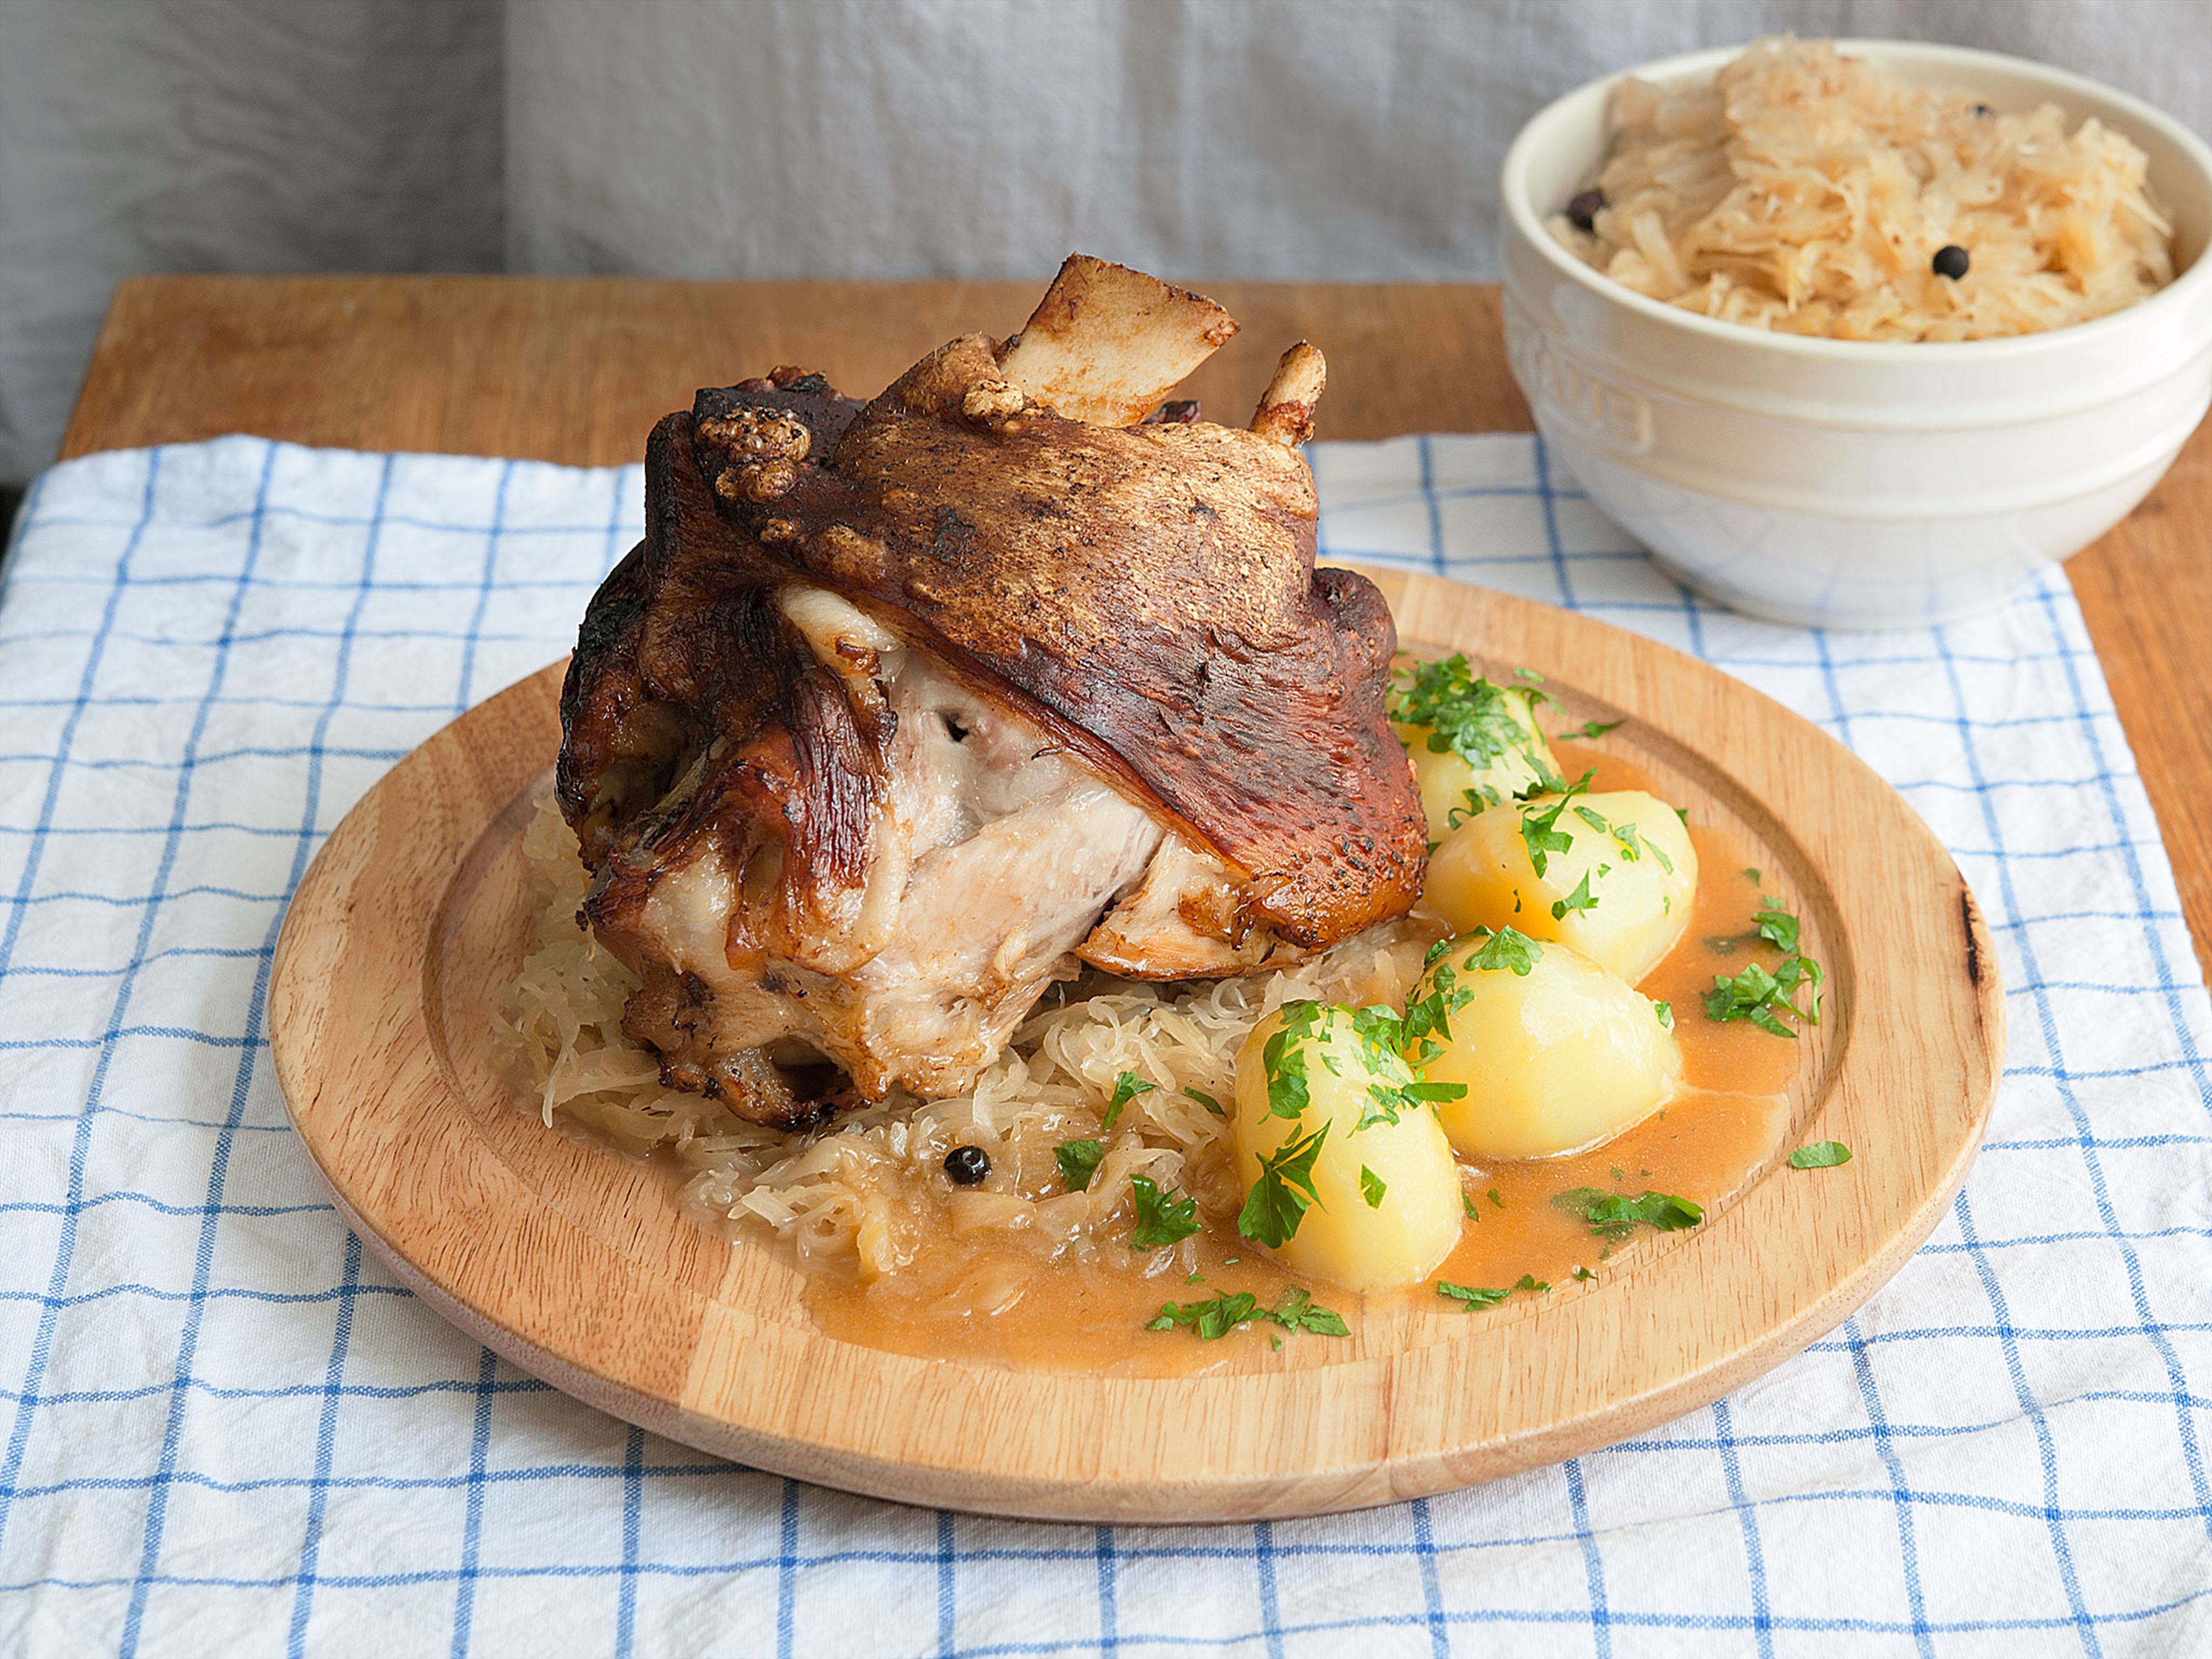 Roast pork with sauerkraut and potatoes